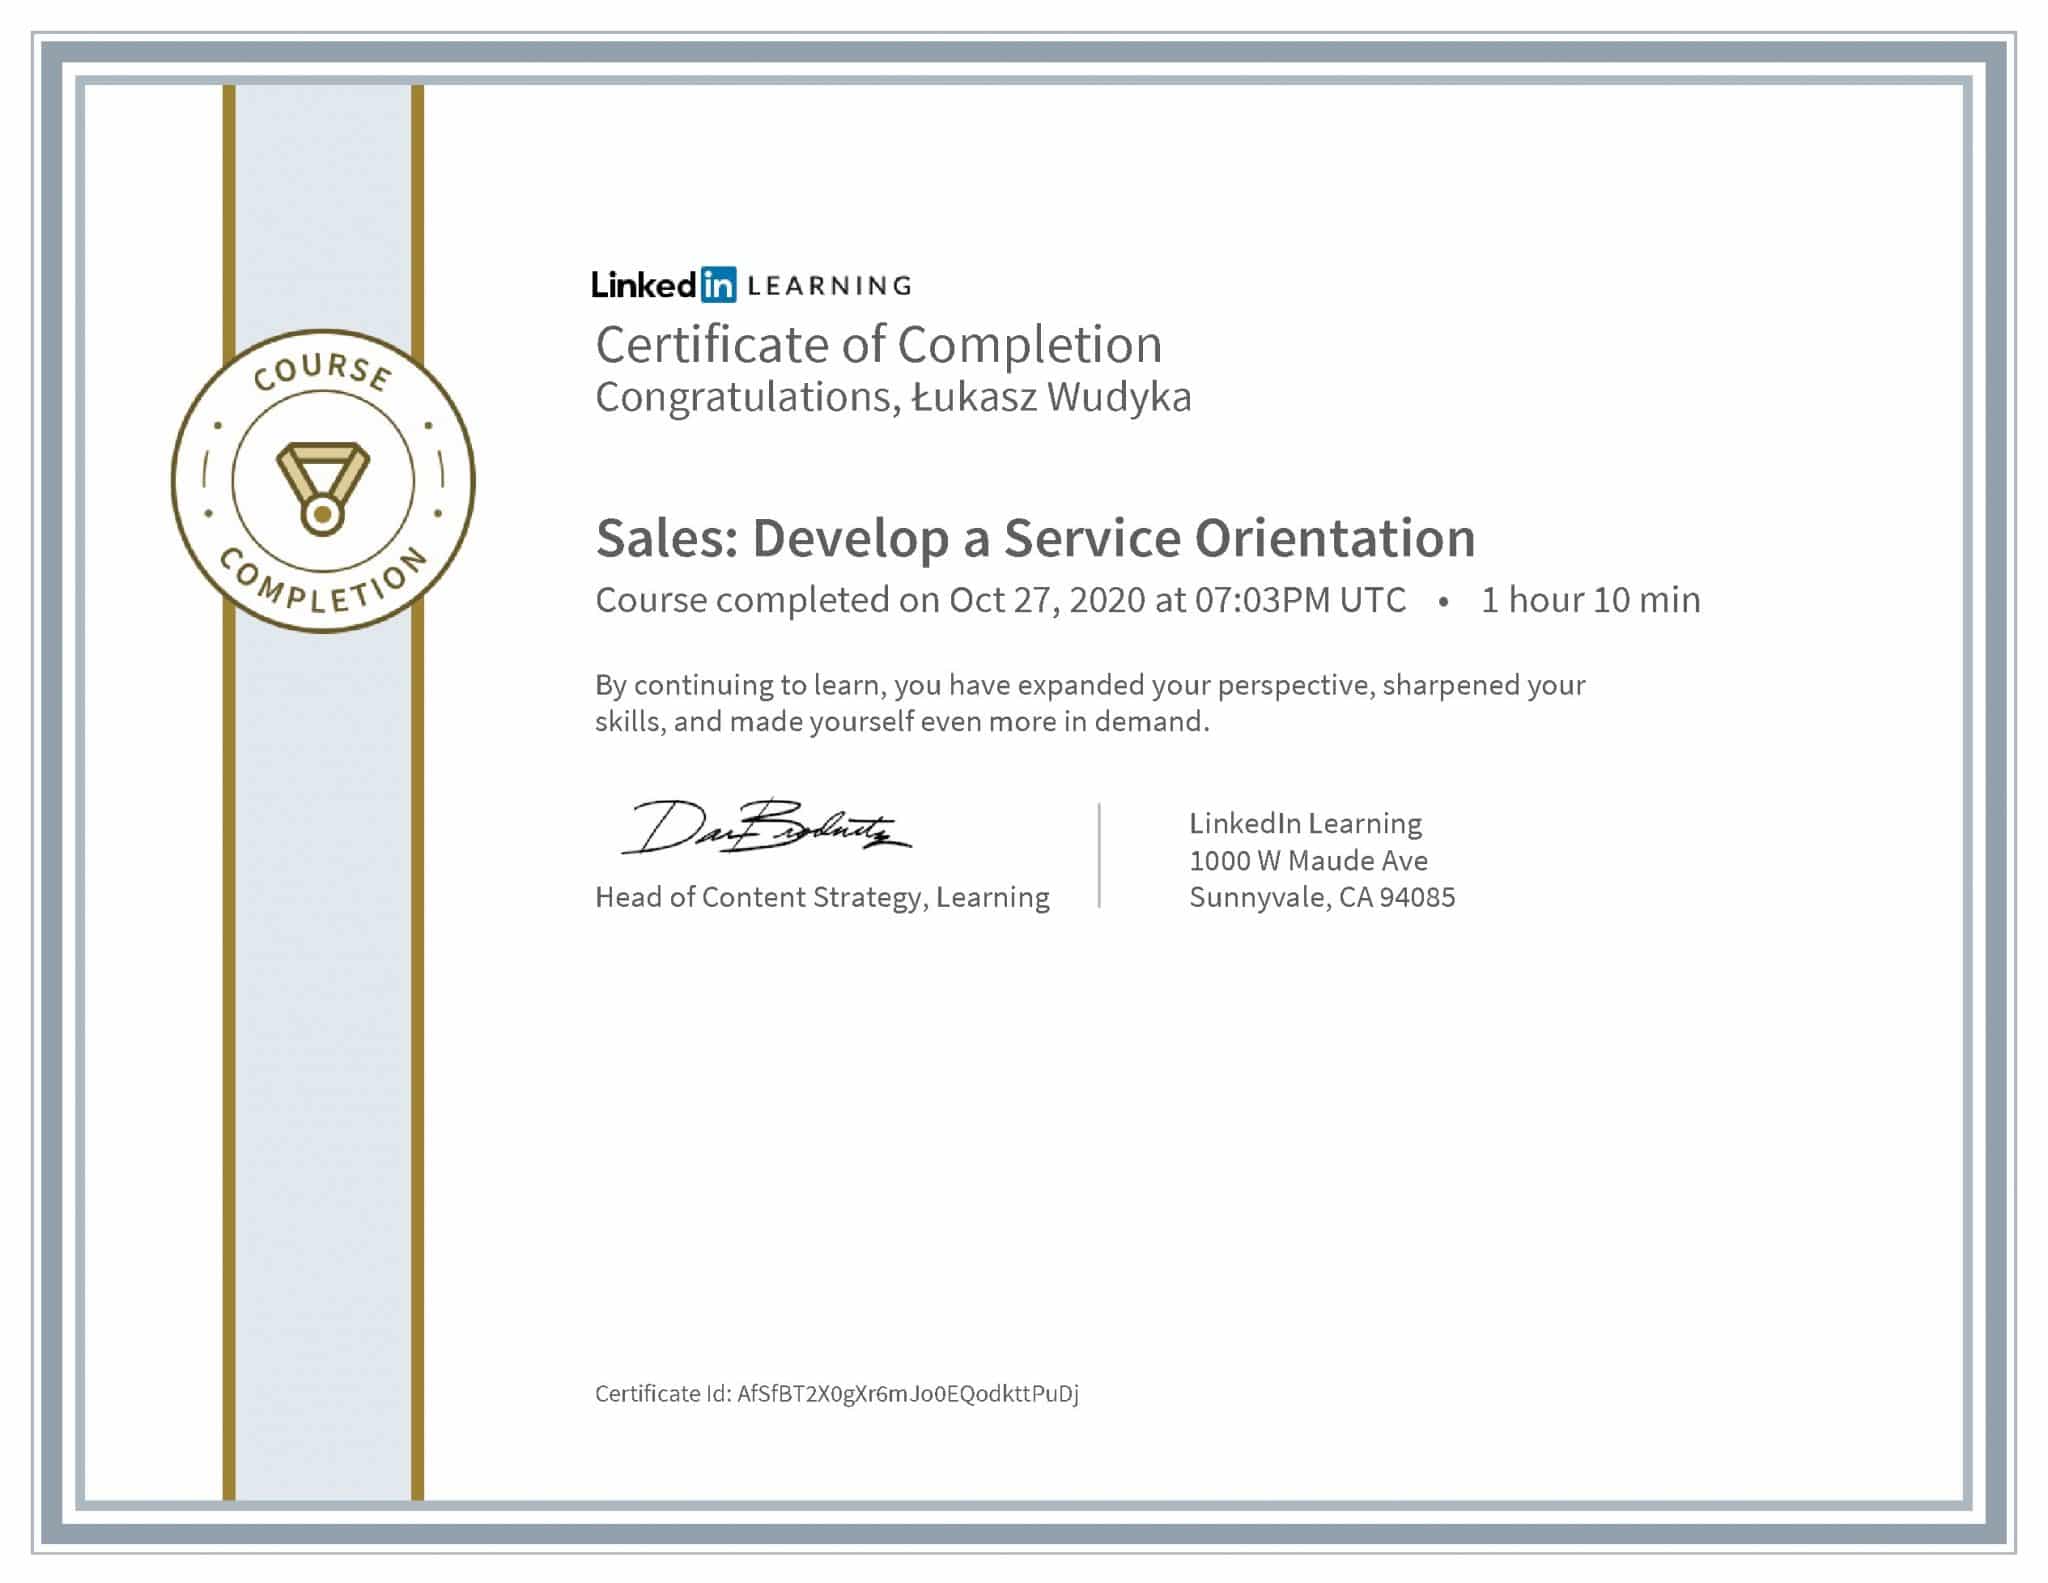 Łukasz Wudyka certyfikat LinkedIn Sales: Develop a Service Orientation